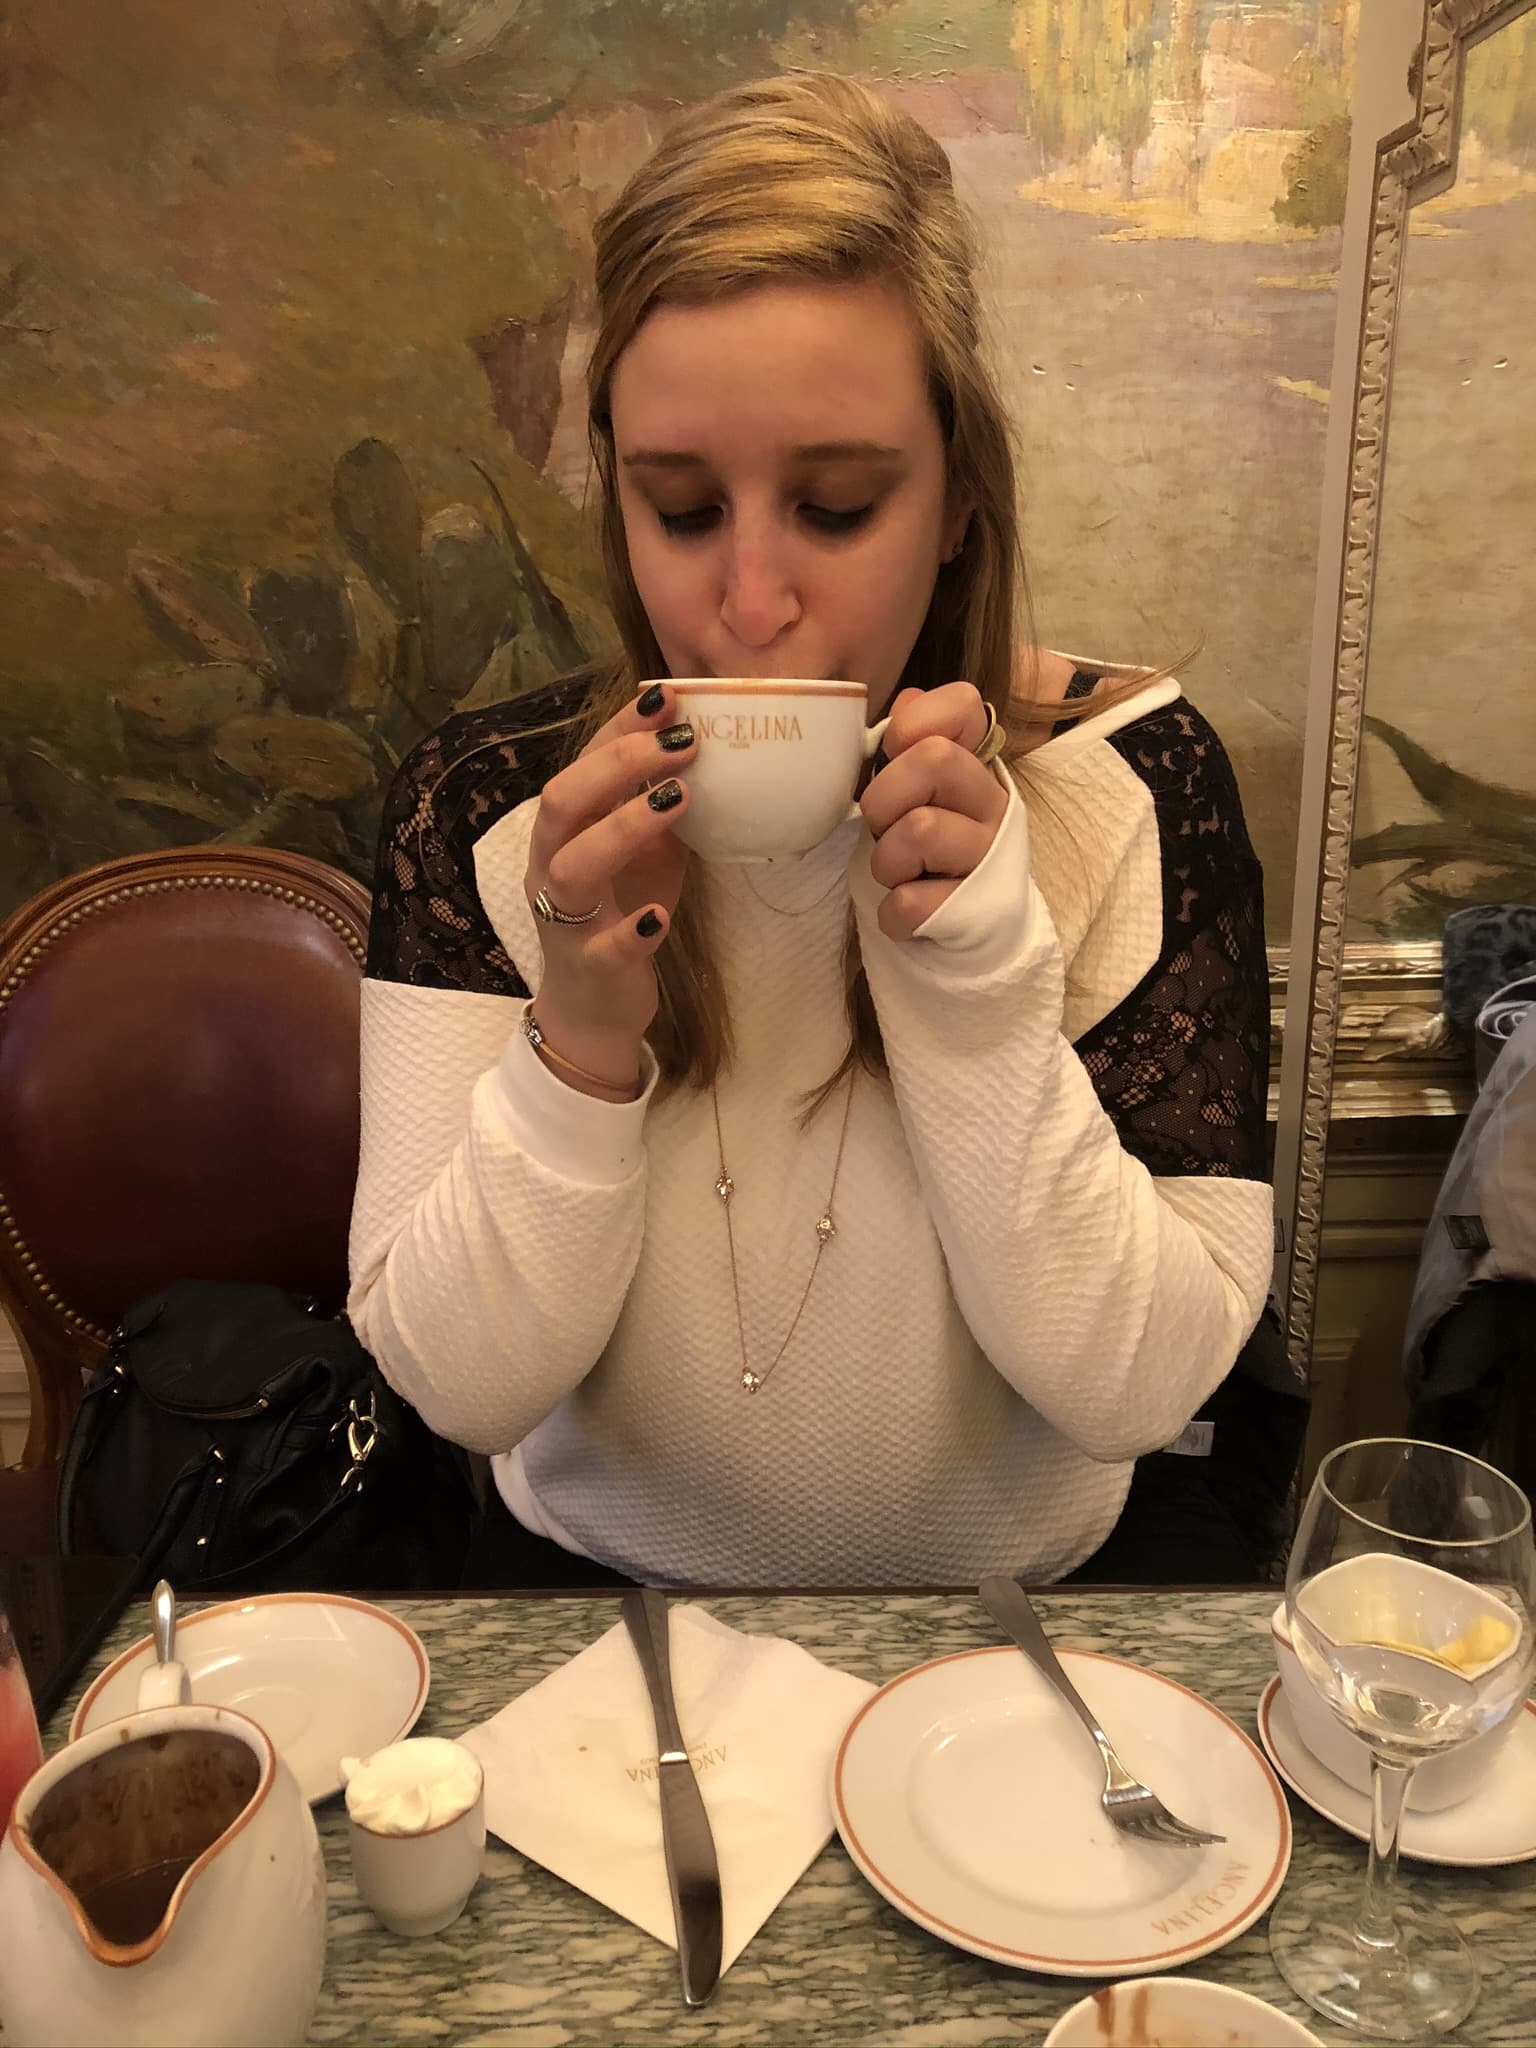 Lisa drinks from a ceramic mug.